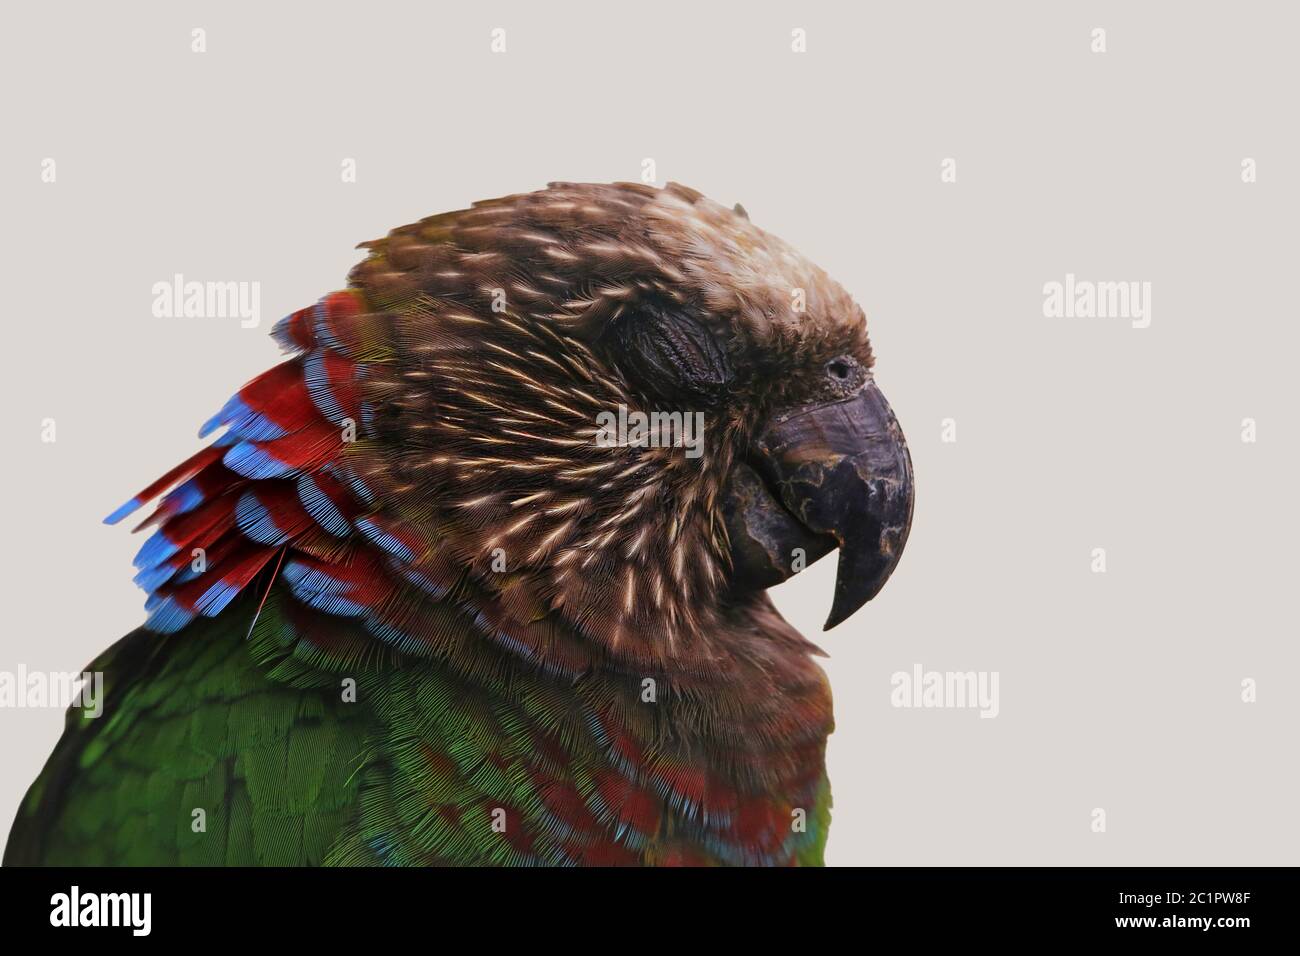 Sleeping Subject Parrot Deroptyus accipitrinus Stock Photo